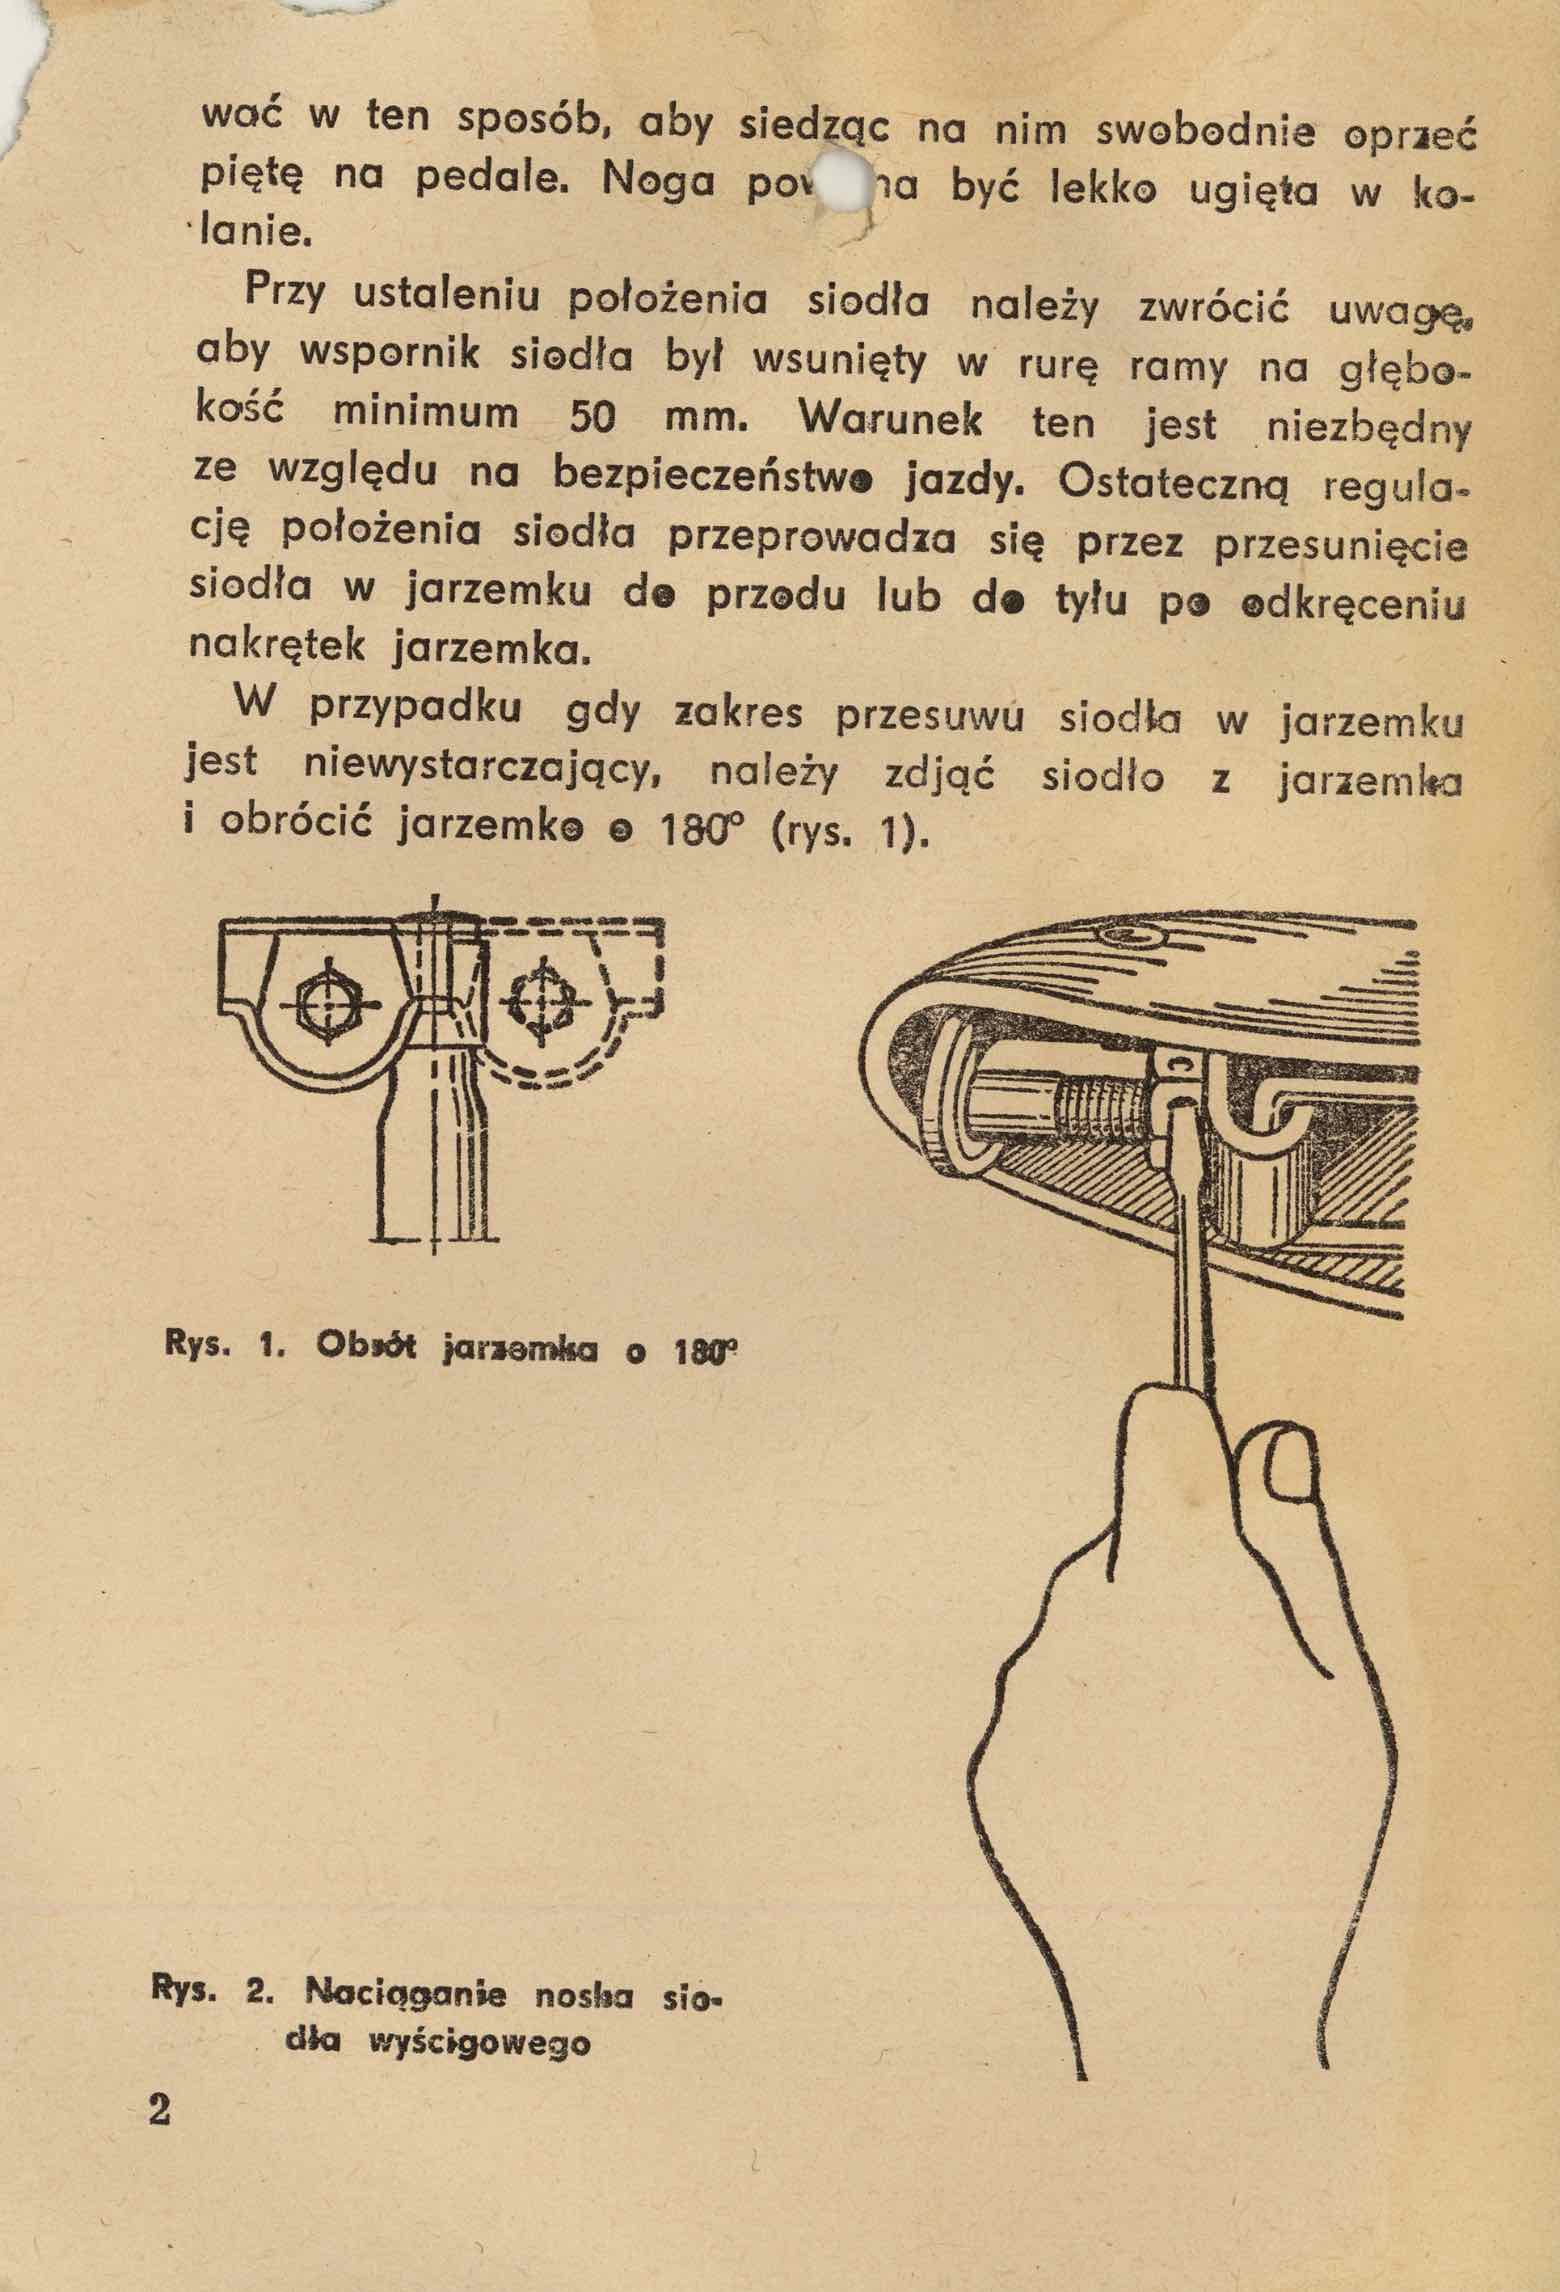 Romet - Instrukcja Obslugi Rowerow 1974 page 2 main image